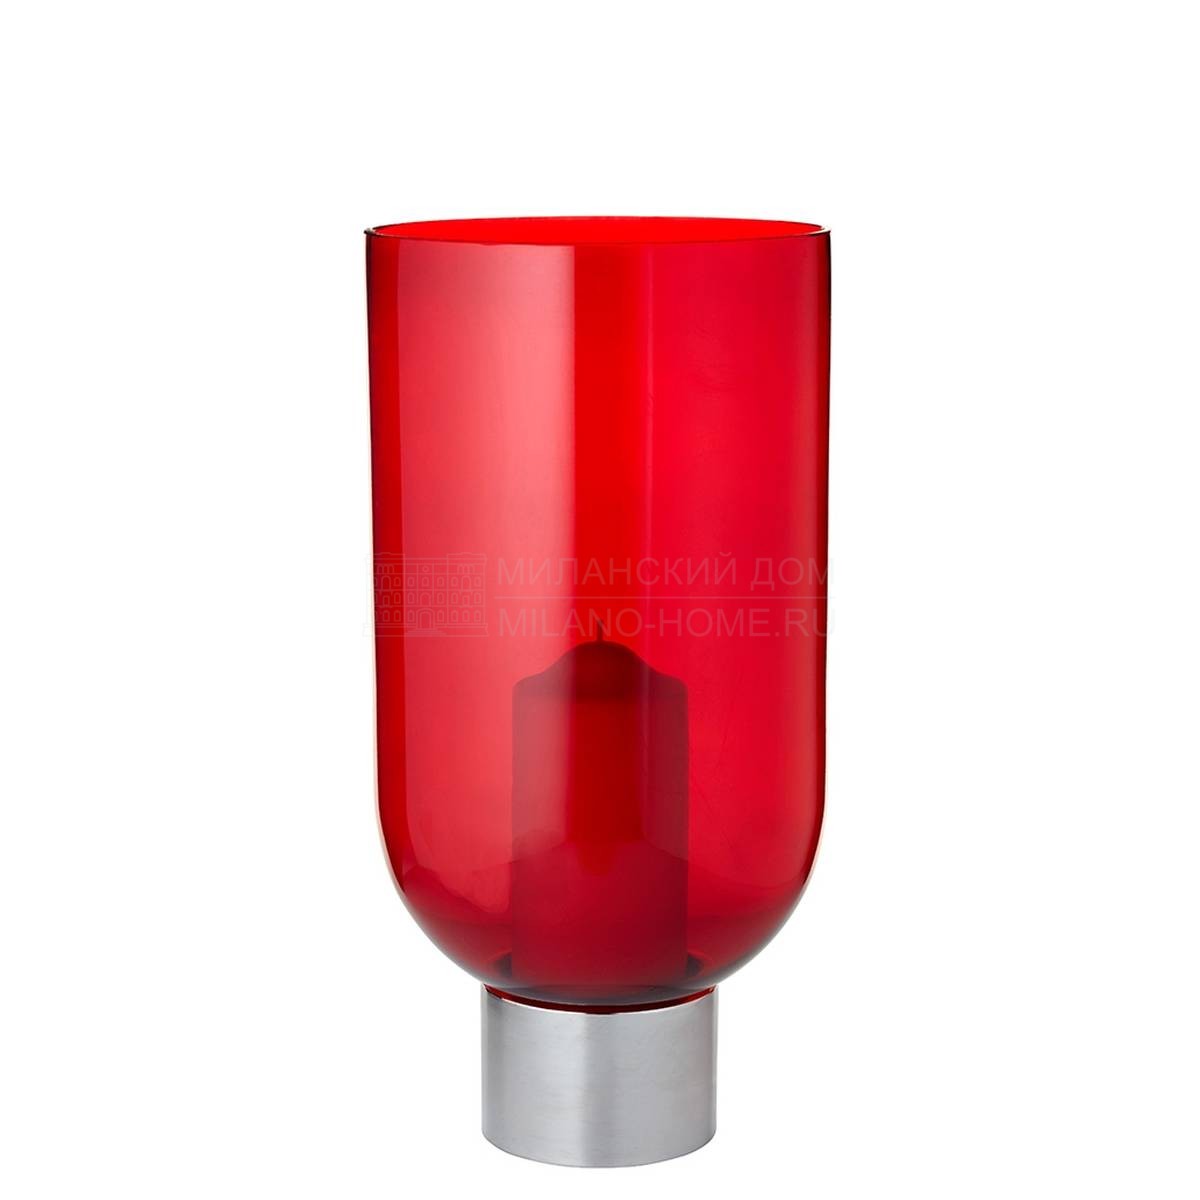 Подсвечник Demi gelule candle holder red из Франции фабрики FORESTIER